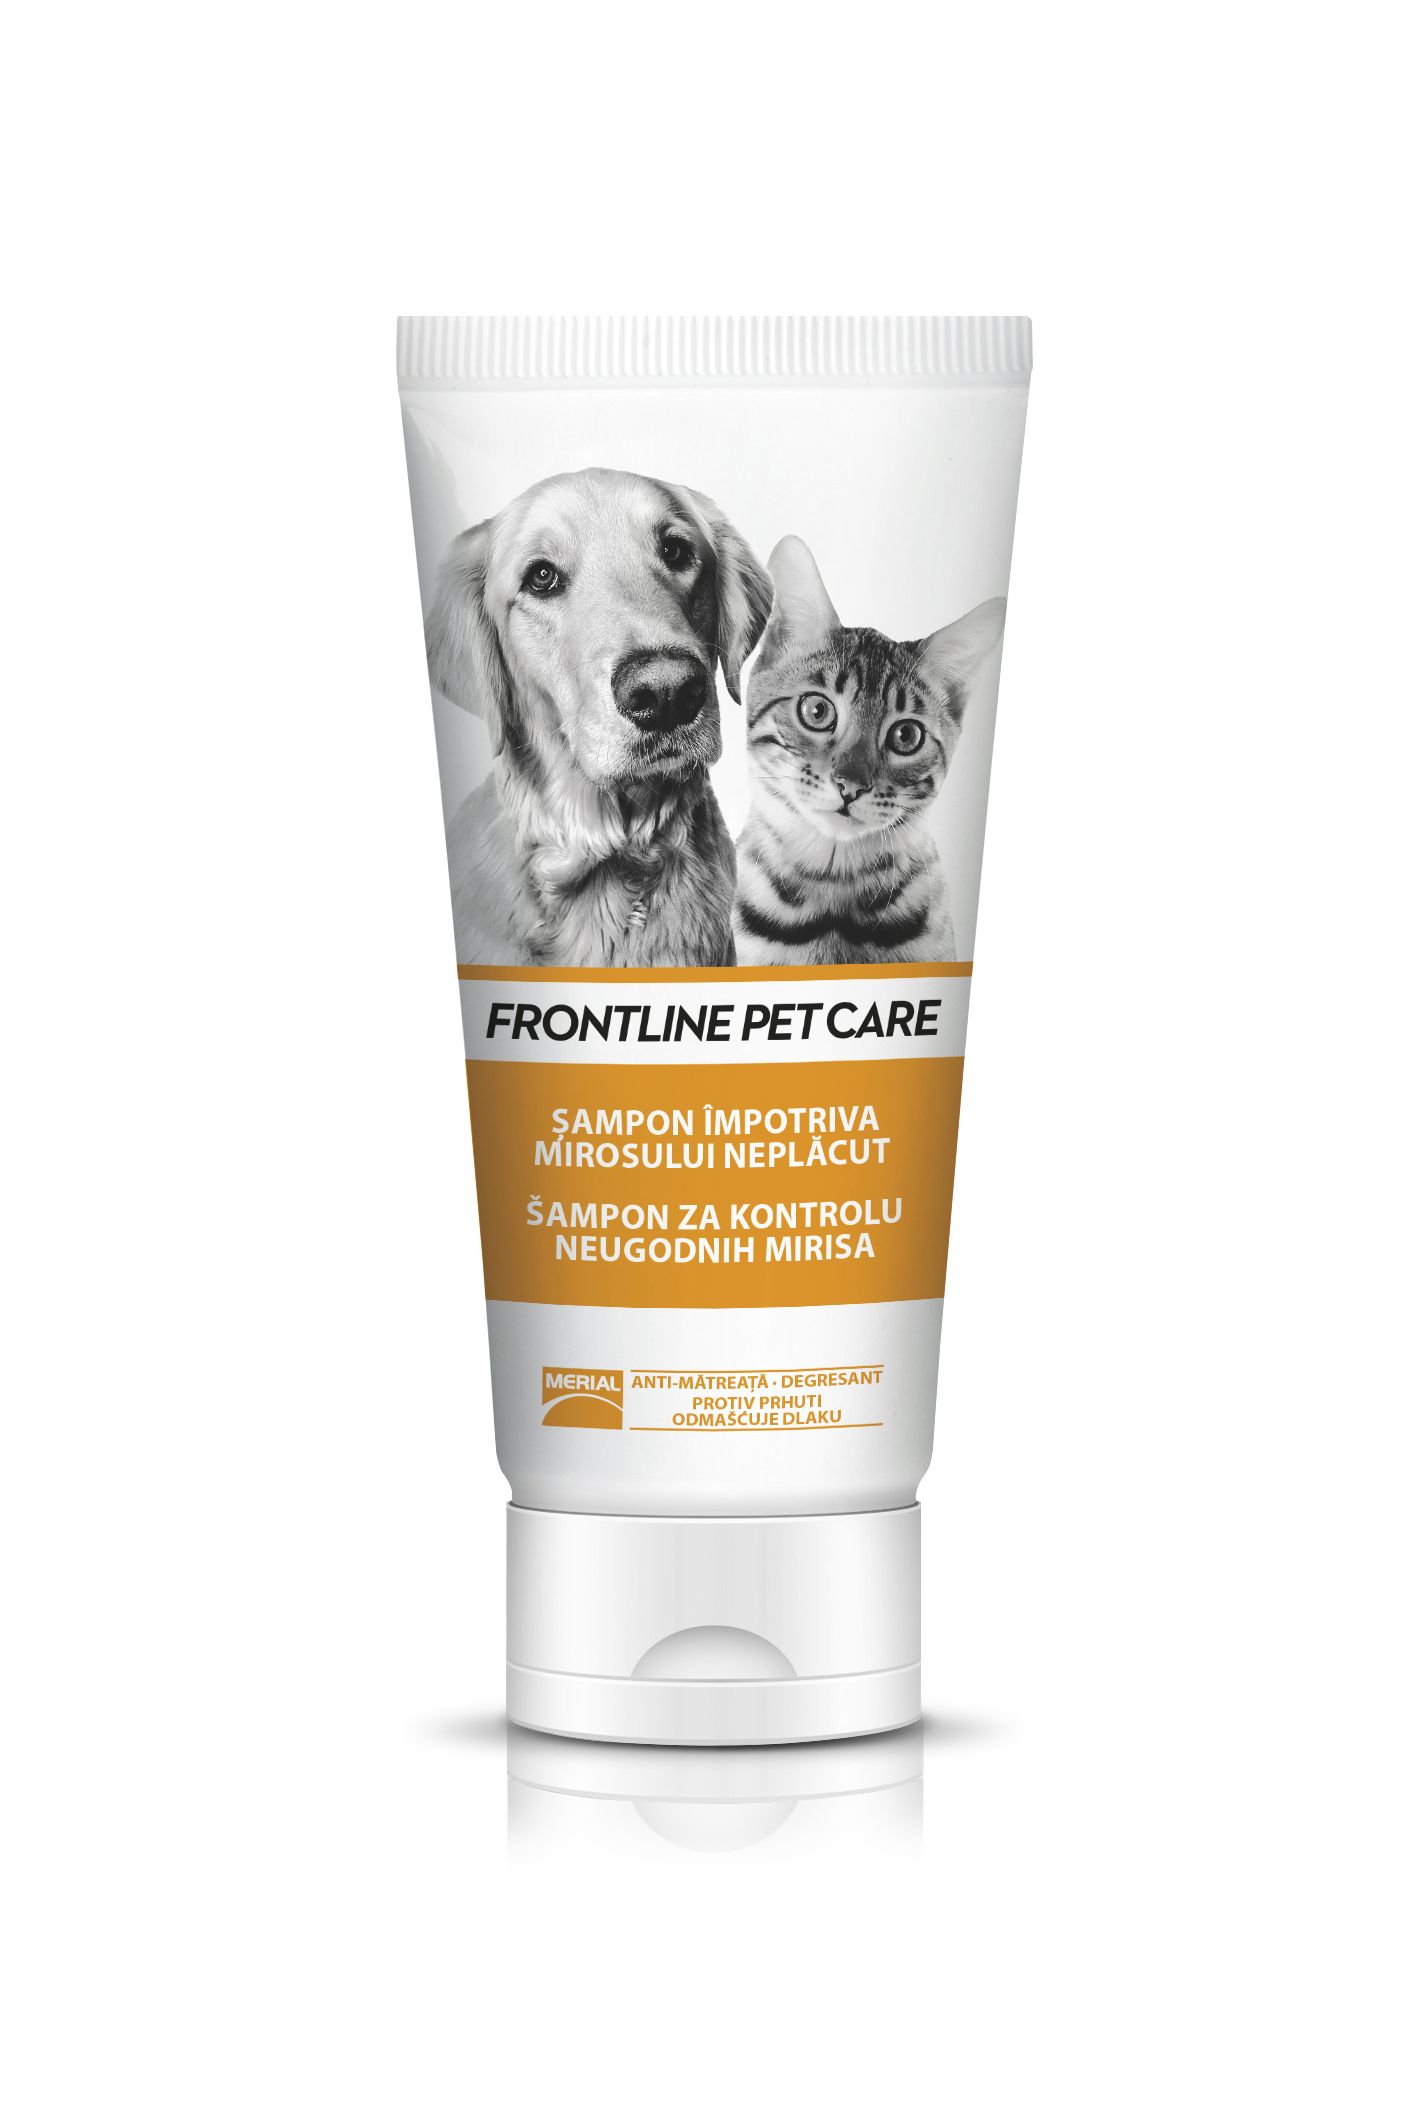 Frontline Pet Care Odor Control, 200 ml Merial